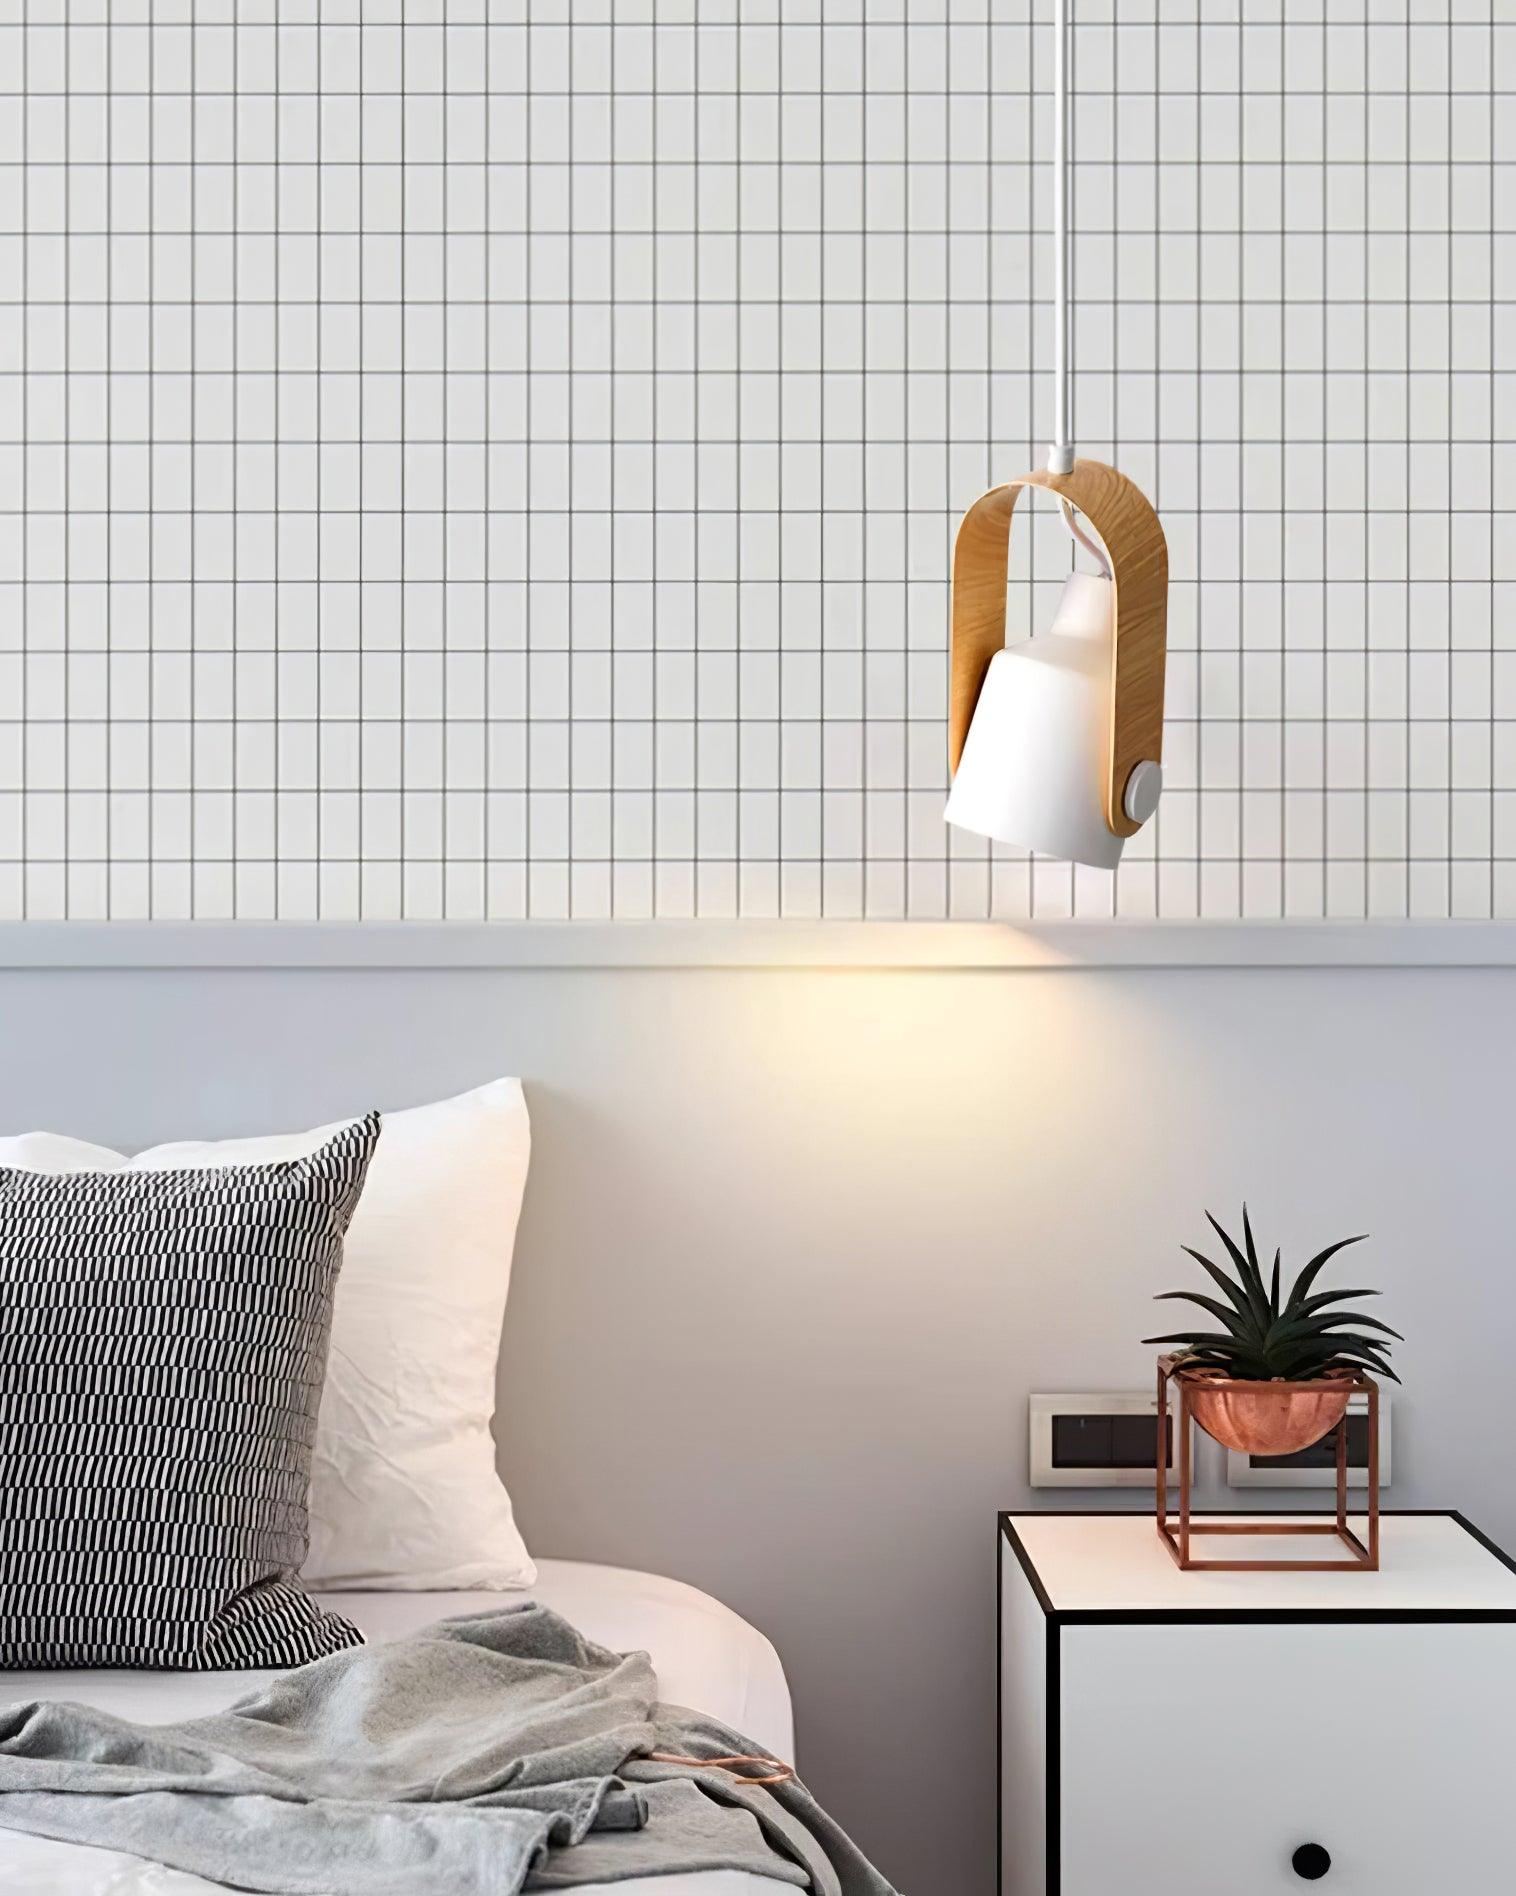 Neato Pendant Lamp 3.5″- 7.8″